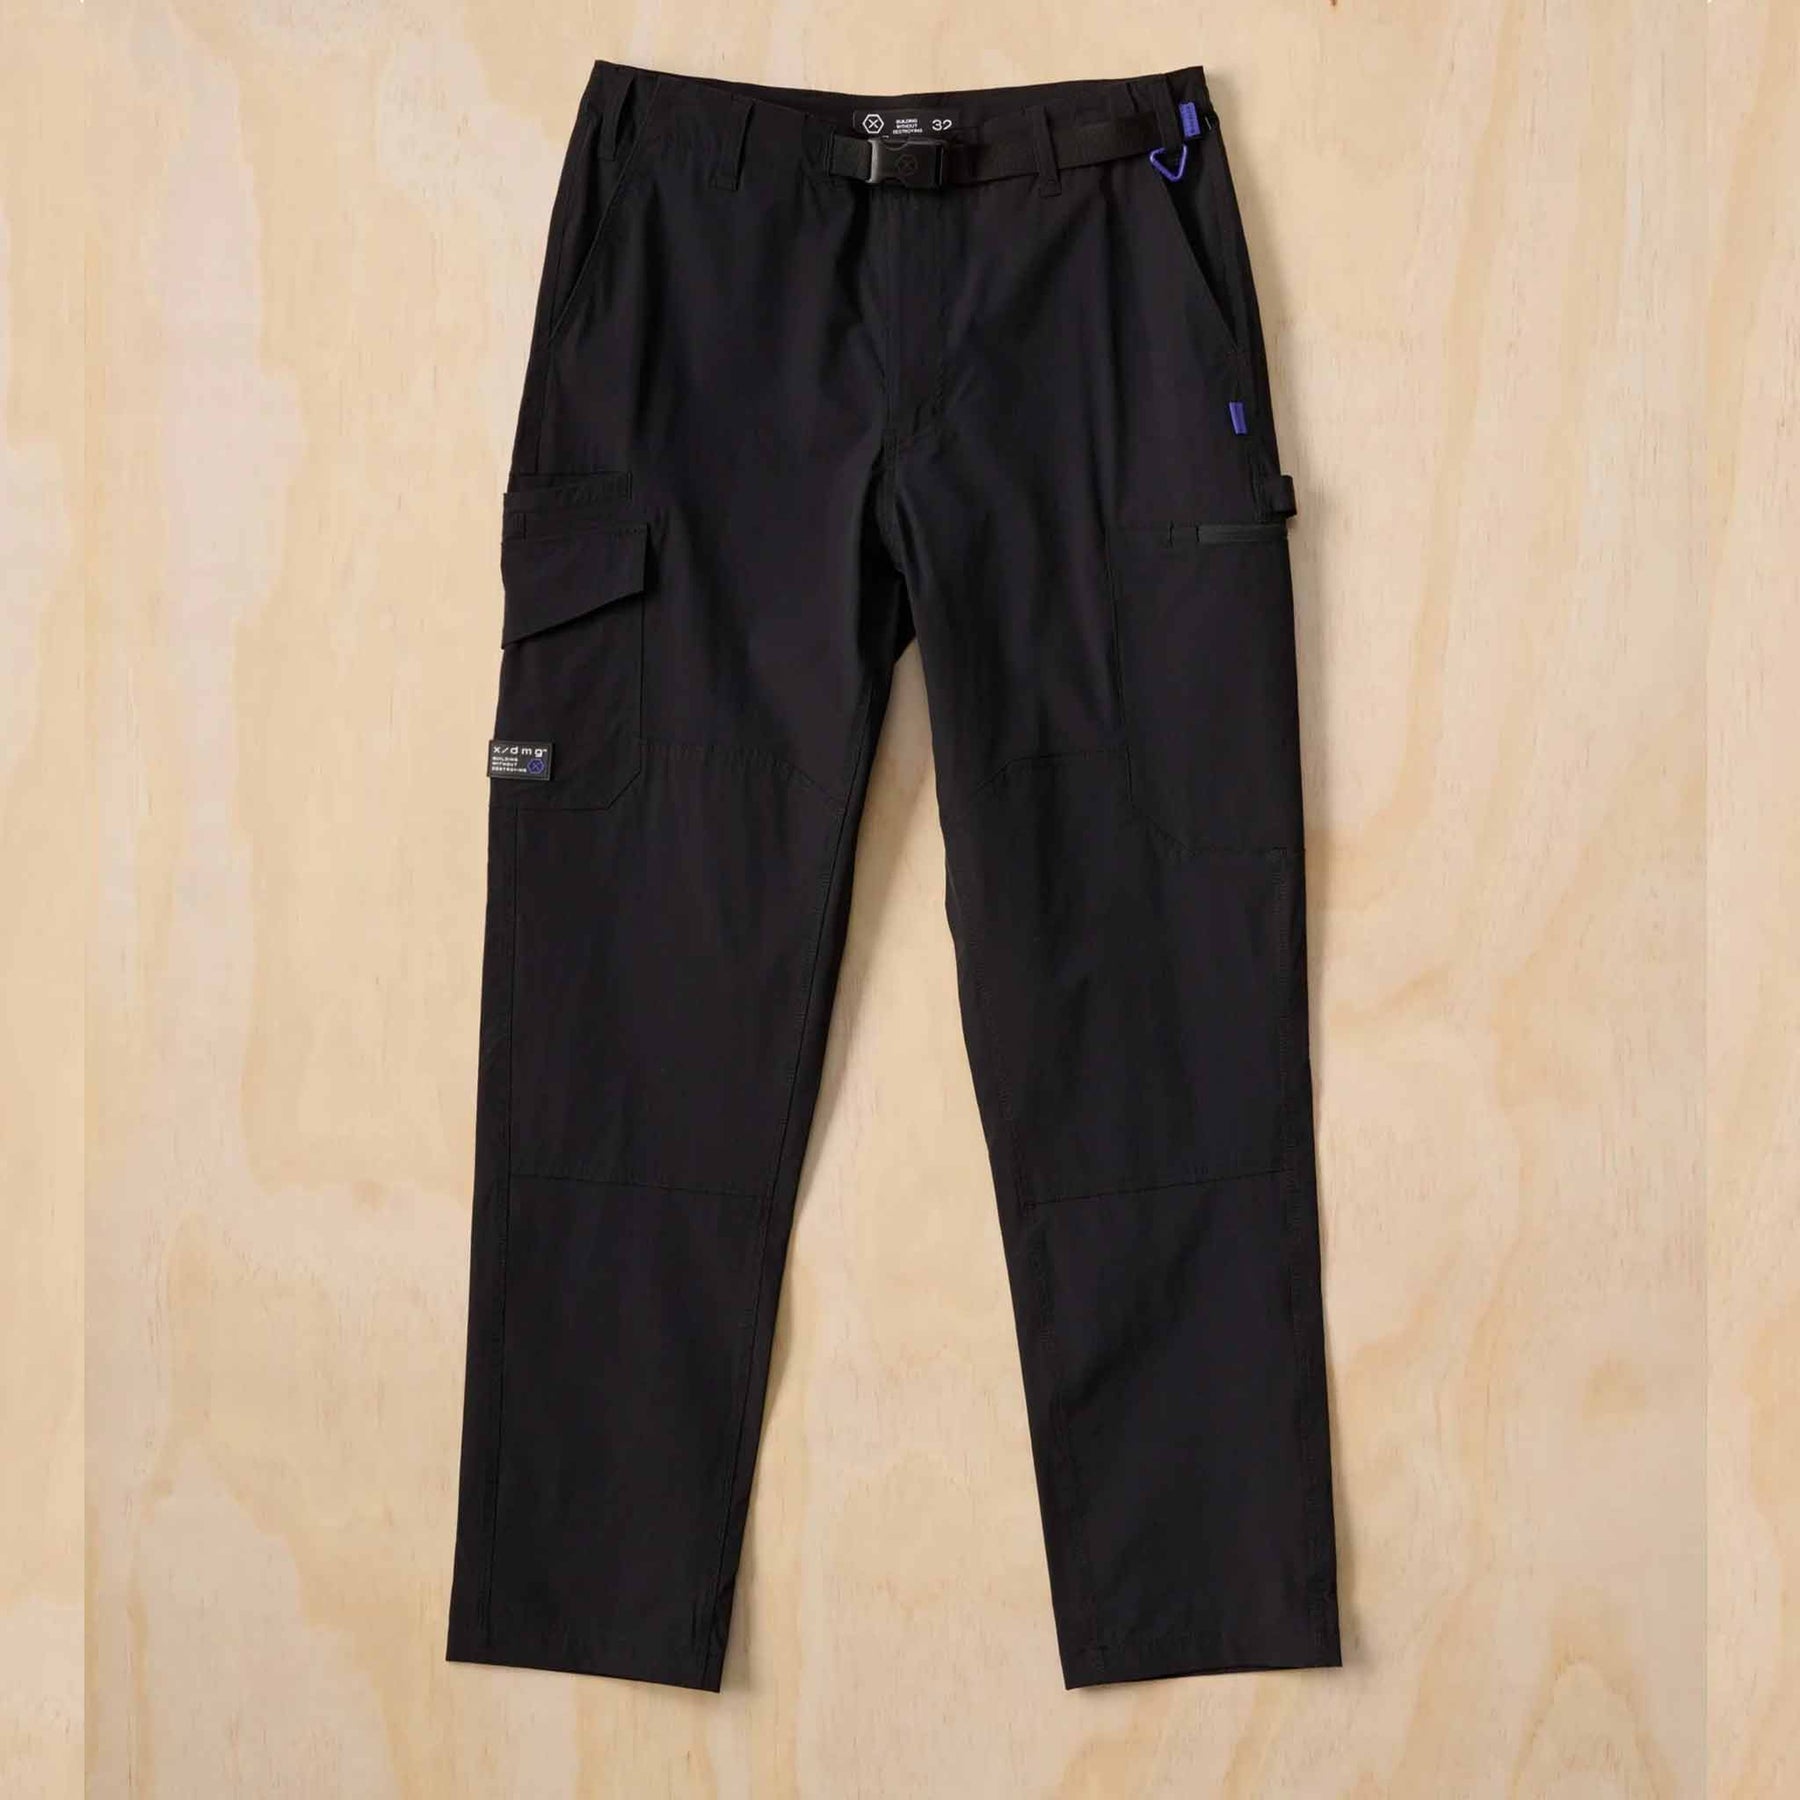 x/dmg lightweight nylon pant in black